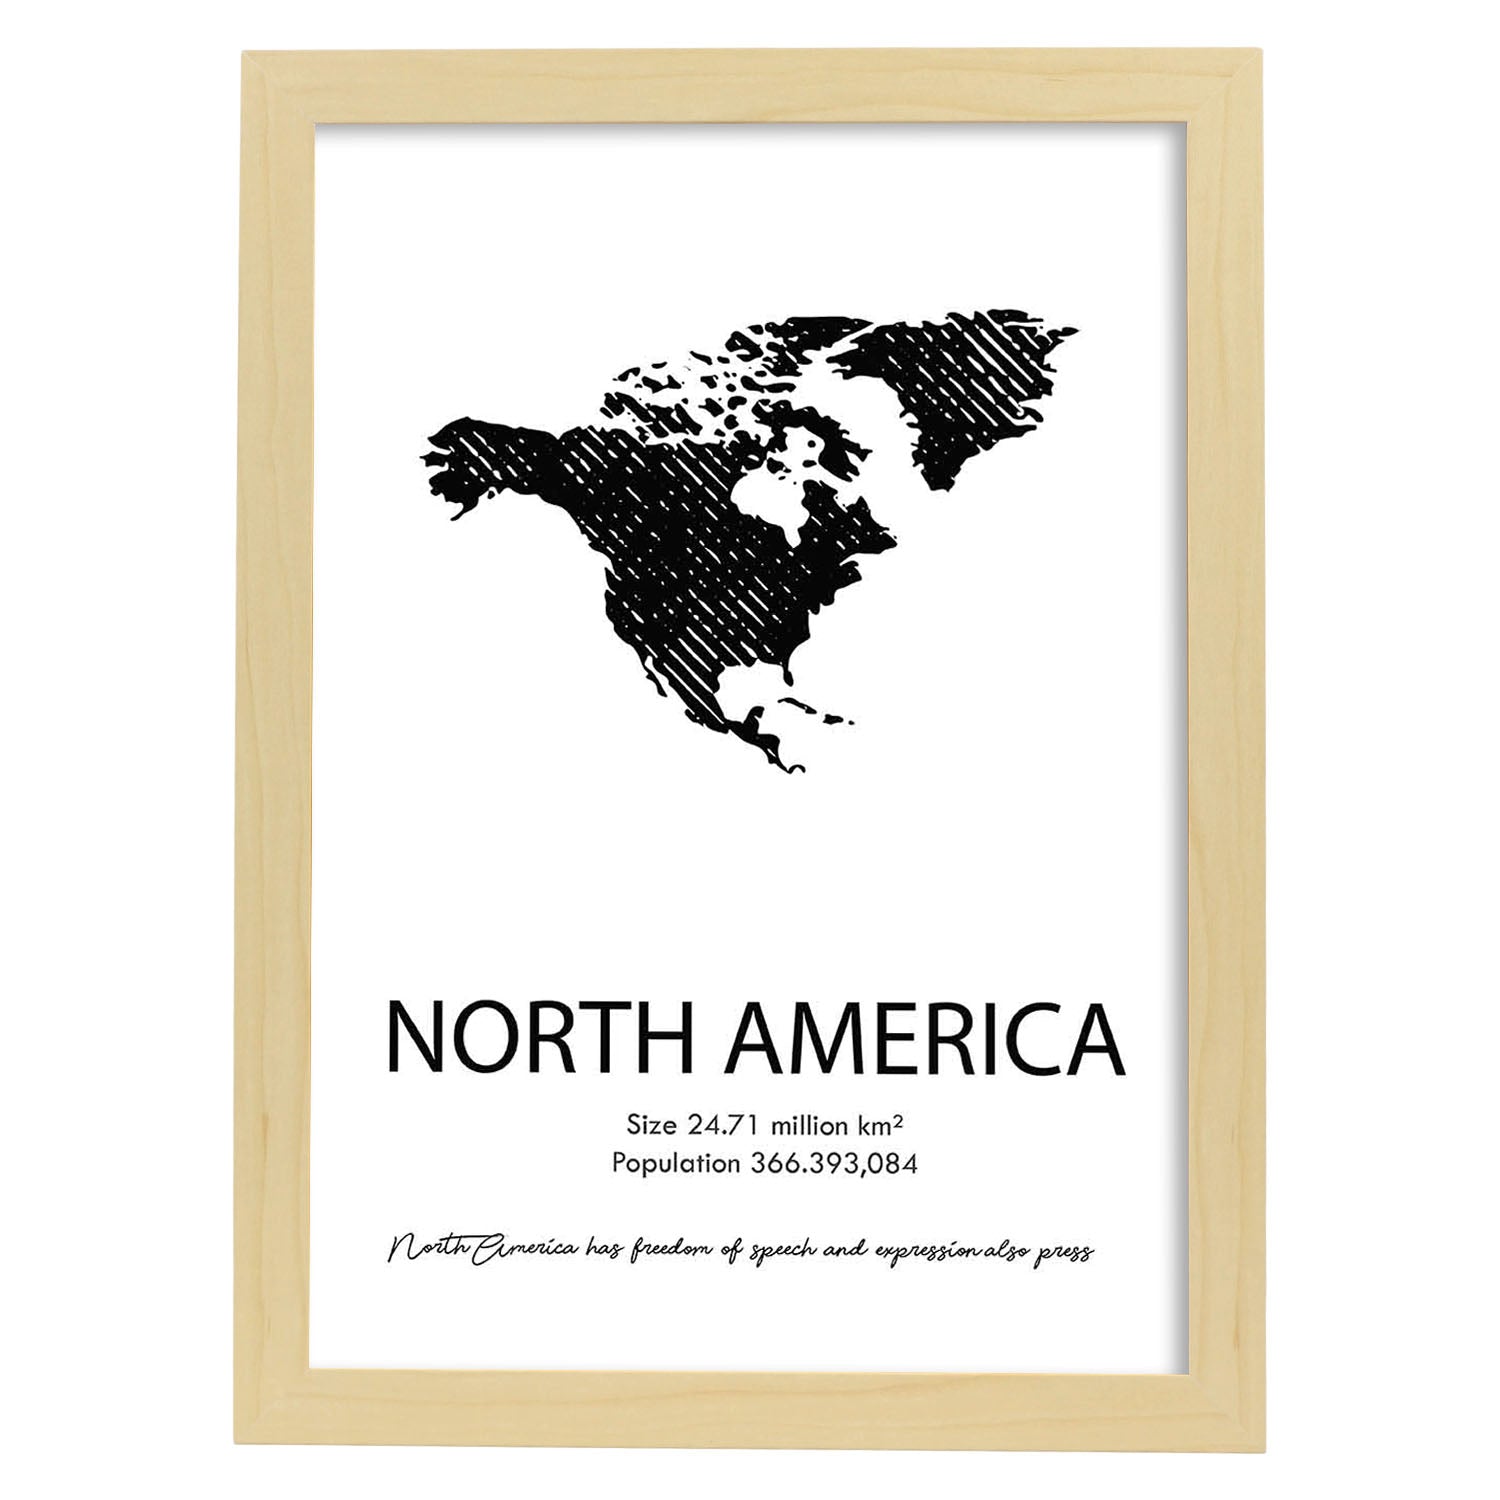 Poster de Norteamérica. Láminas de paises y continentes del mundo.-Artwork-Nacnic-A4-Marco Madera clara-Nacnic Estudio SL